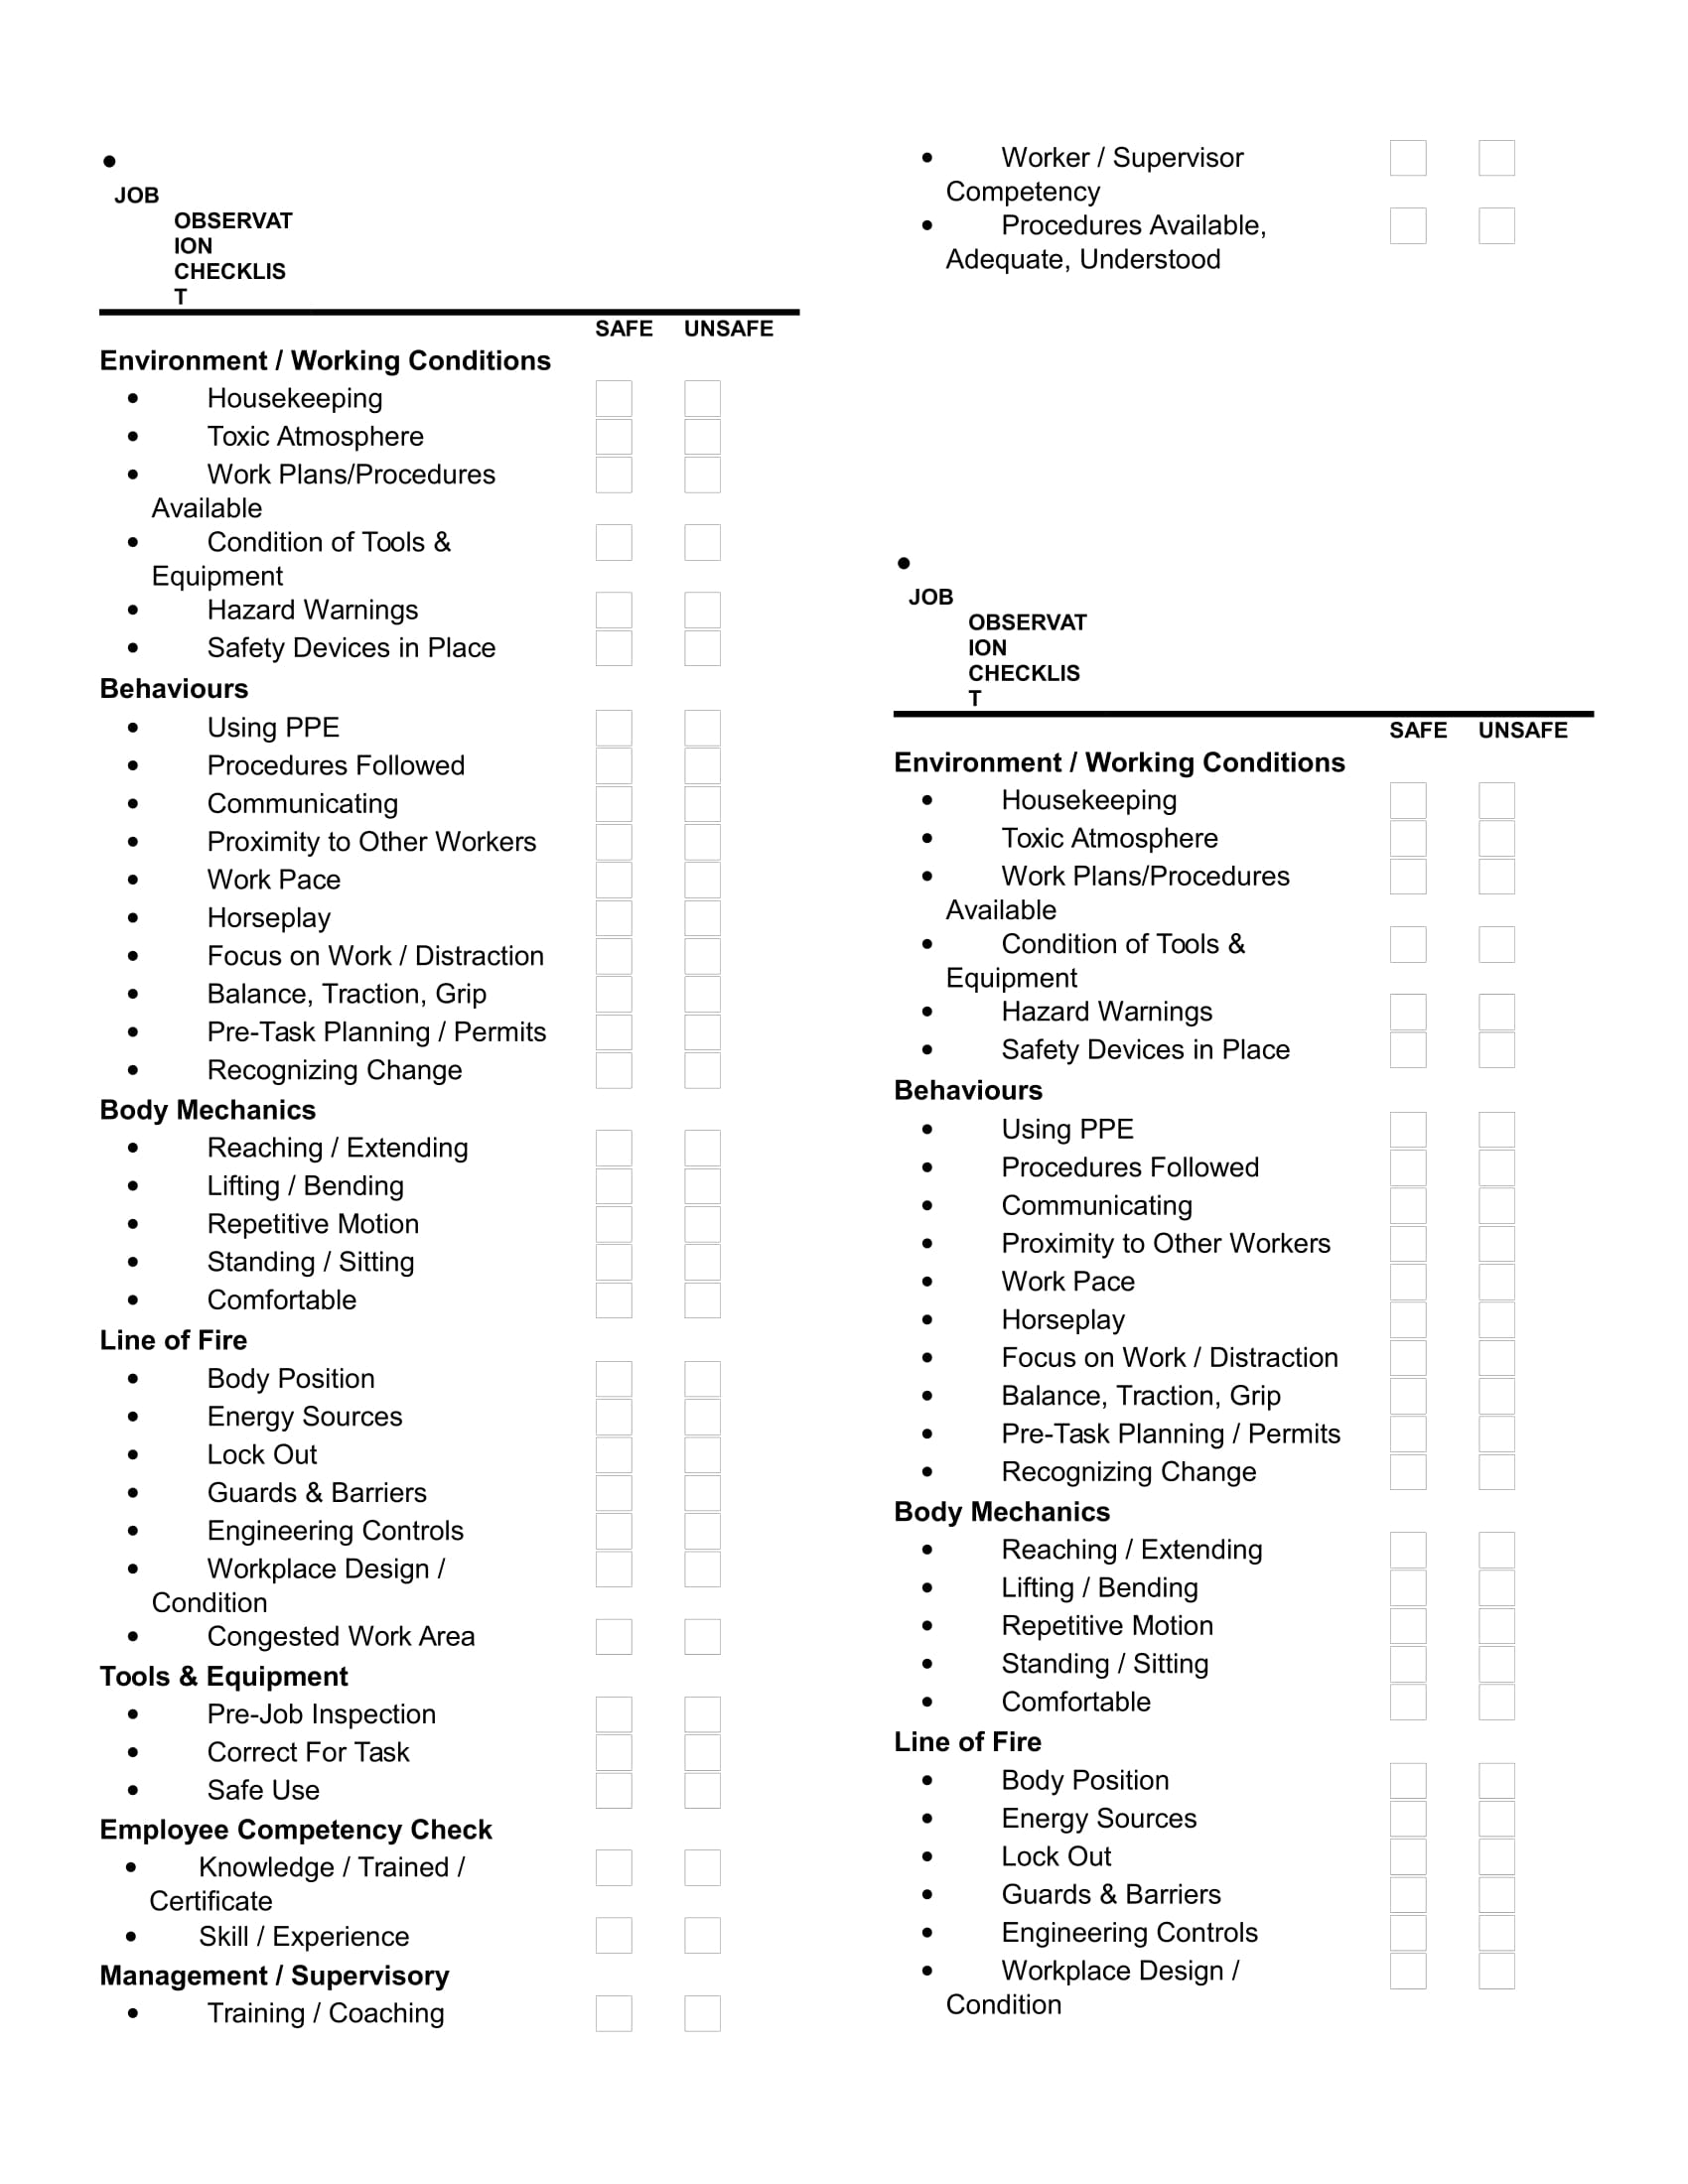 job observation checklist form in doc 1